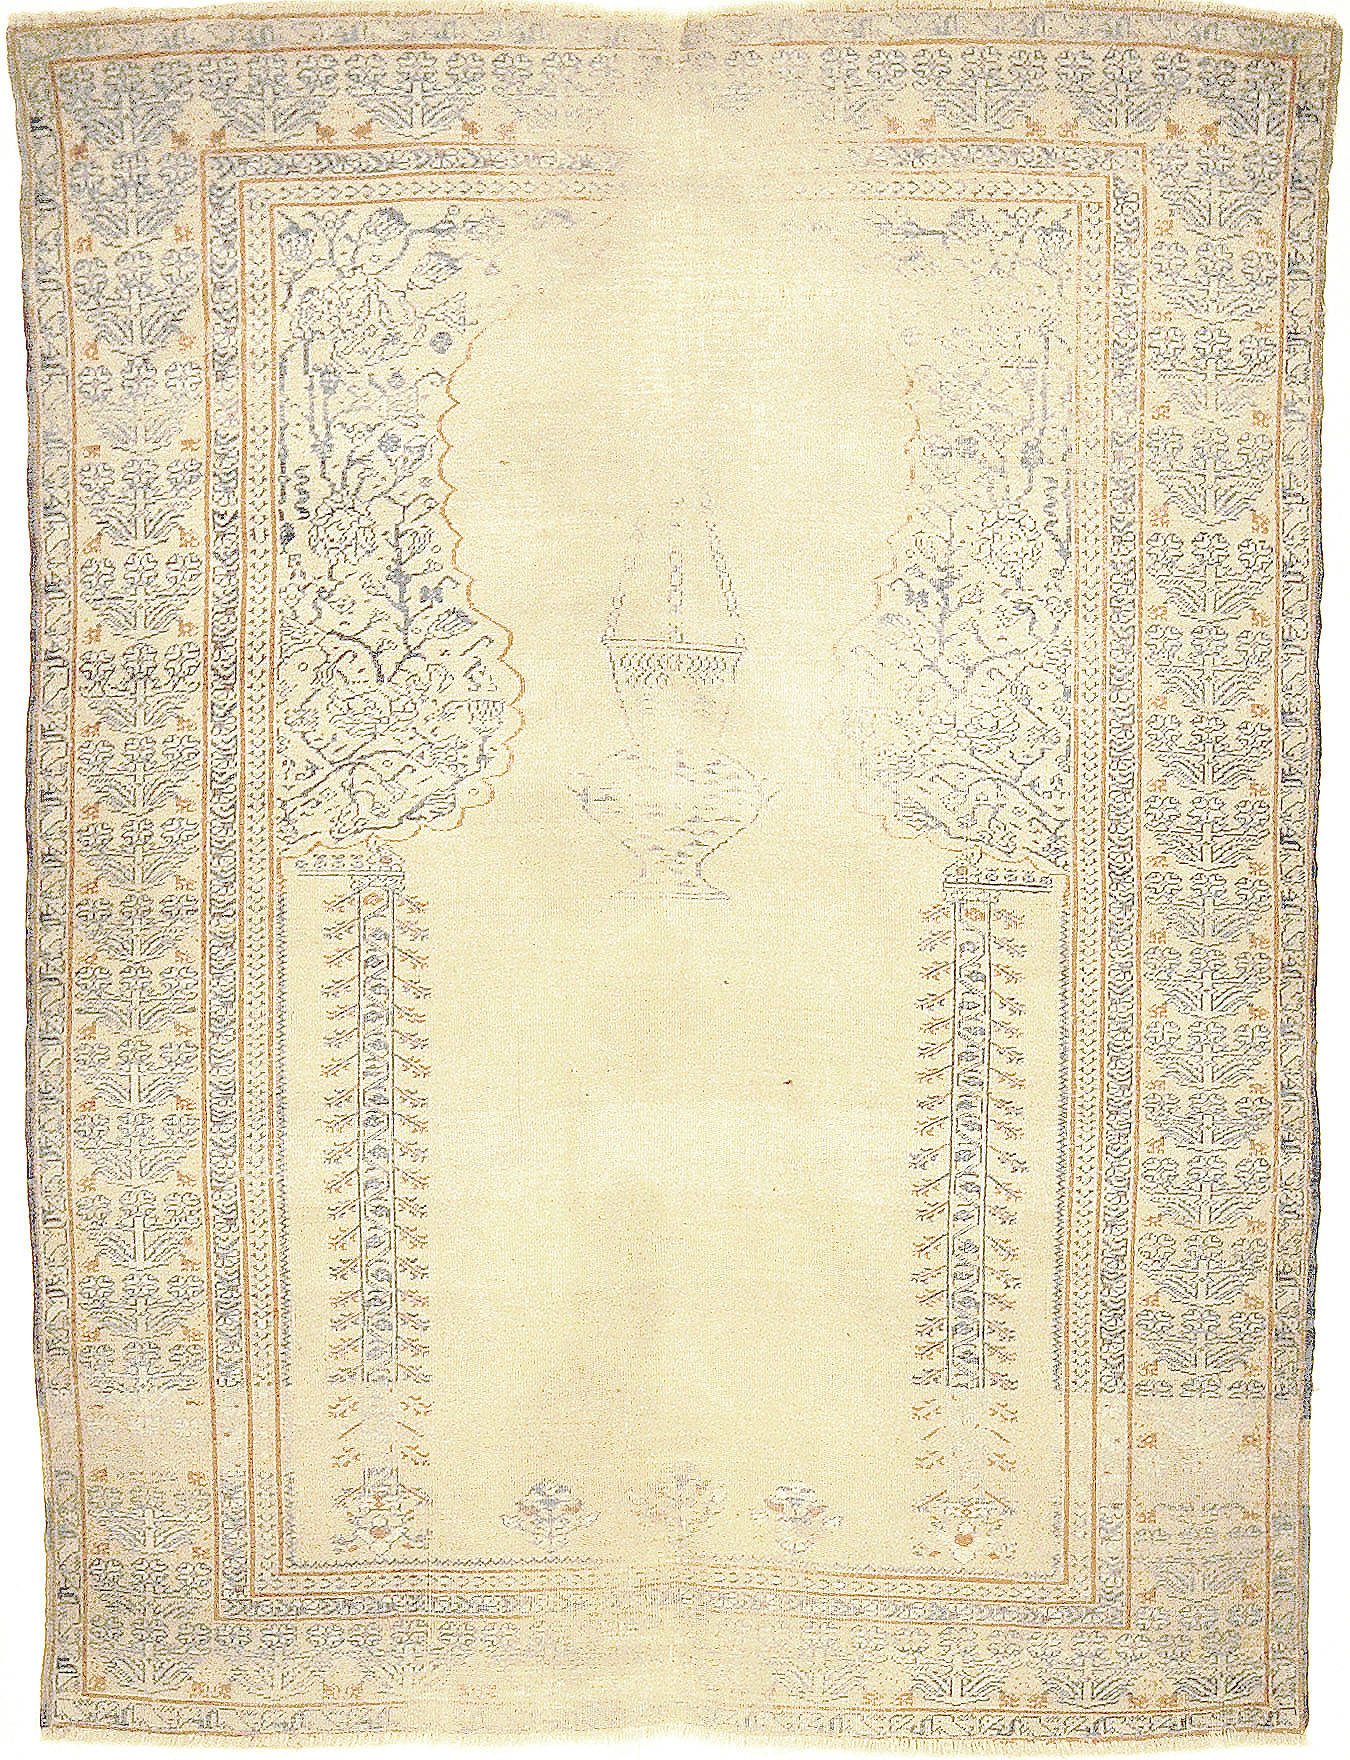 Antique Transylvanian 17th Century Turkish Prayer Rug. A fine piece of genuine woven carpet art sold at the Santa Barbara Design Center.